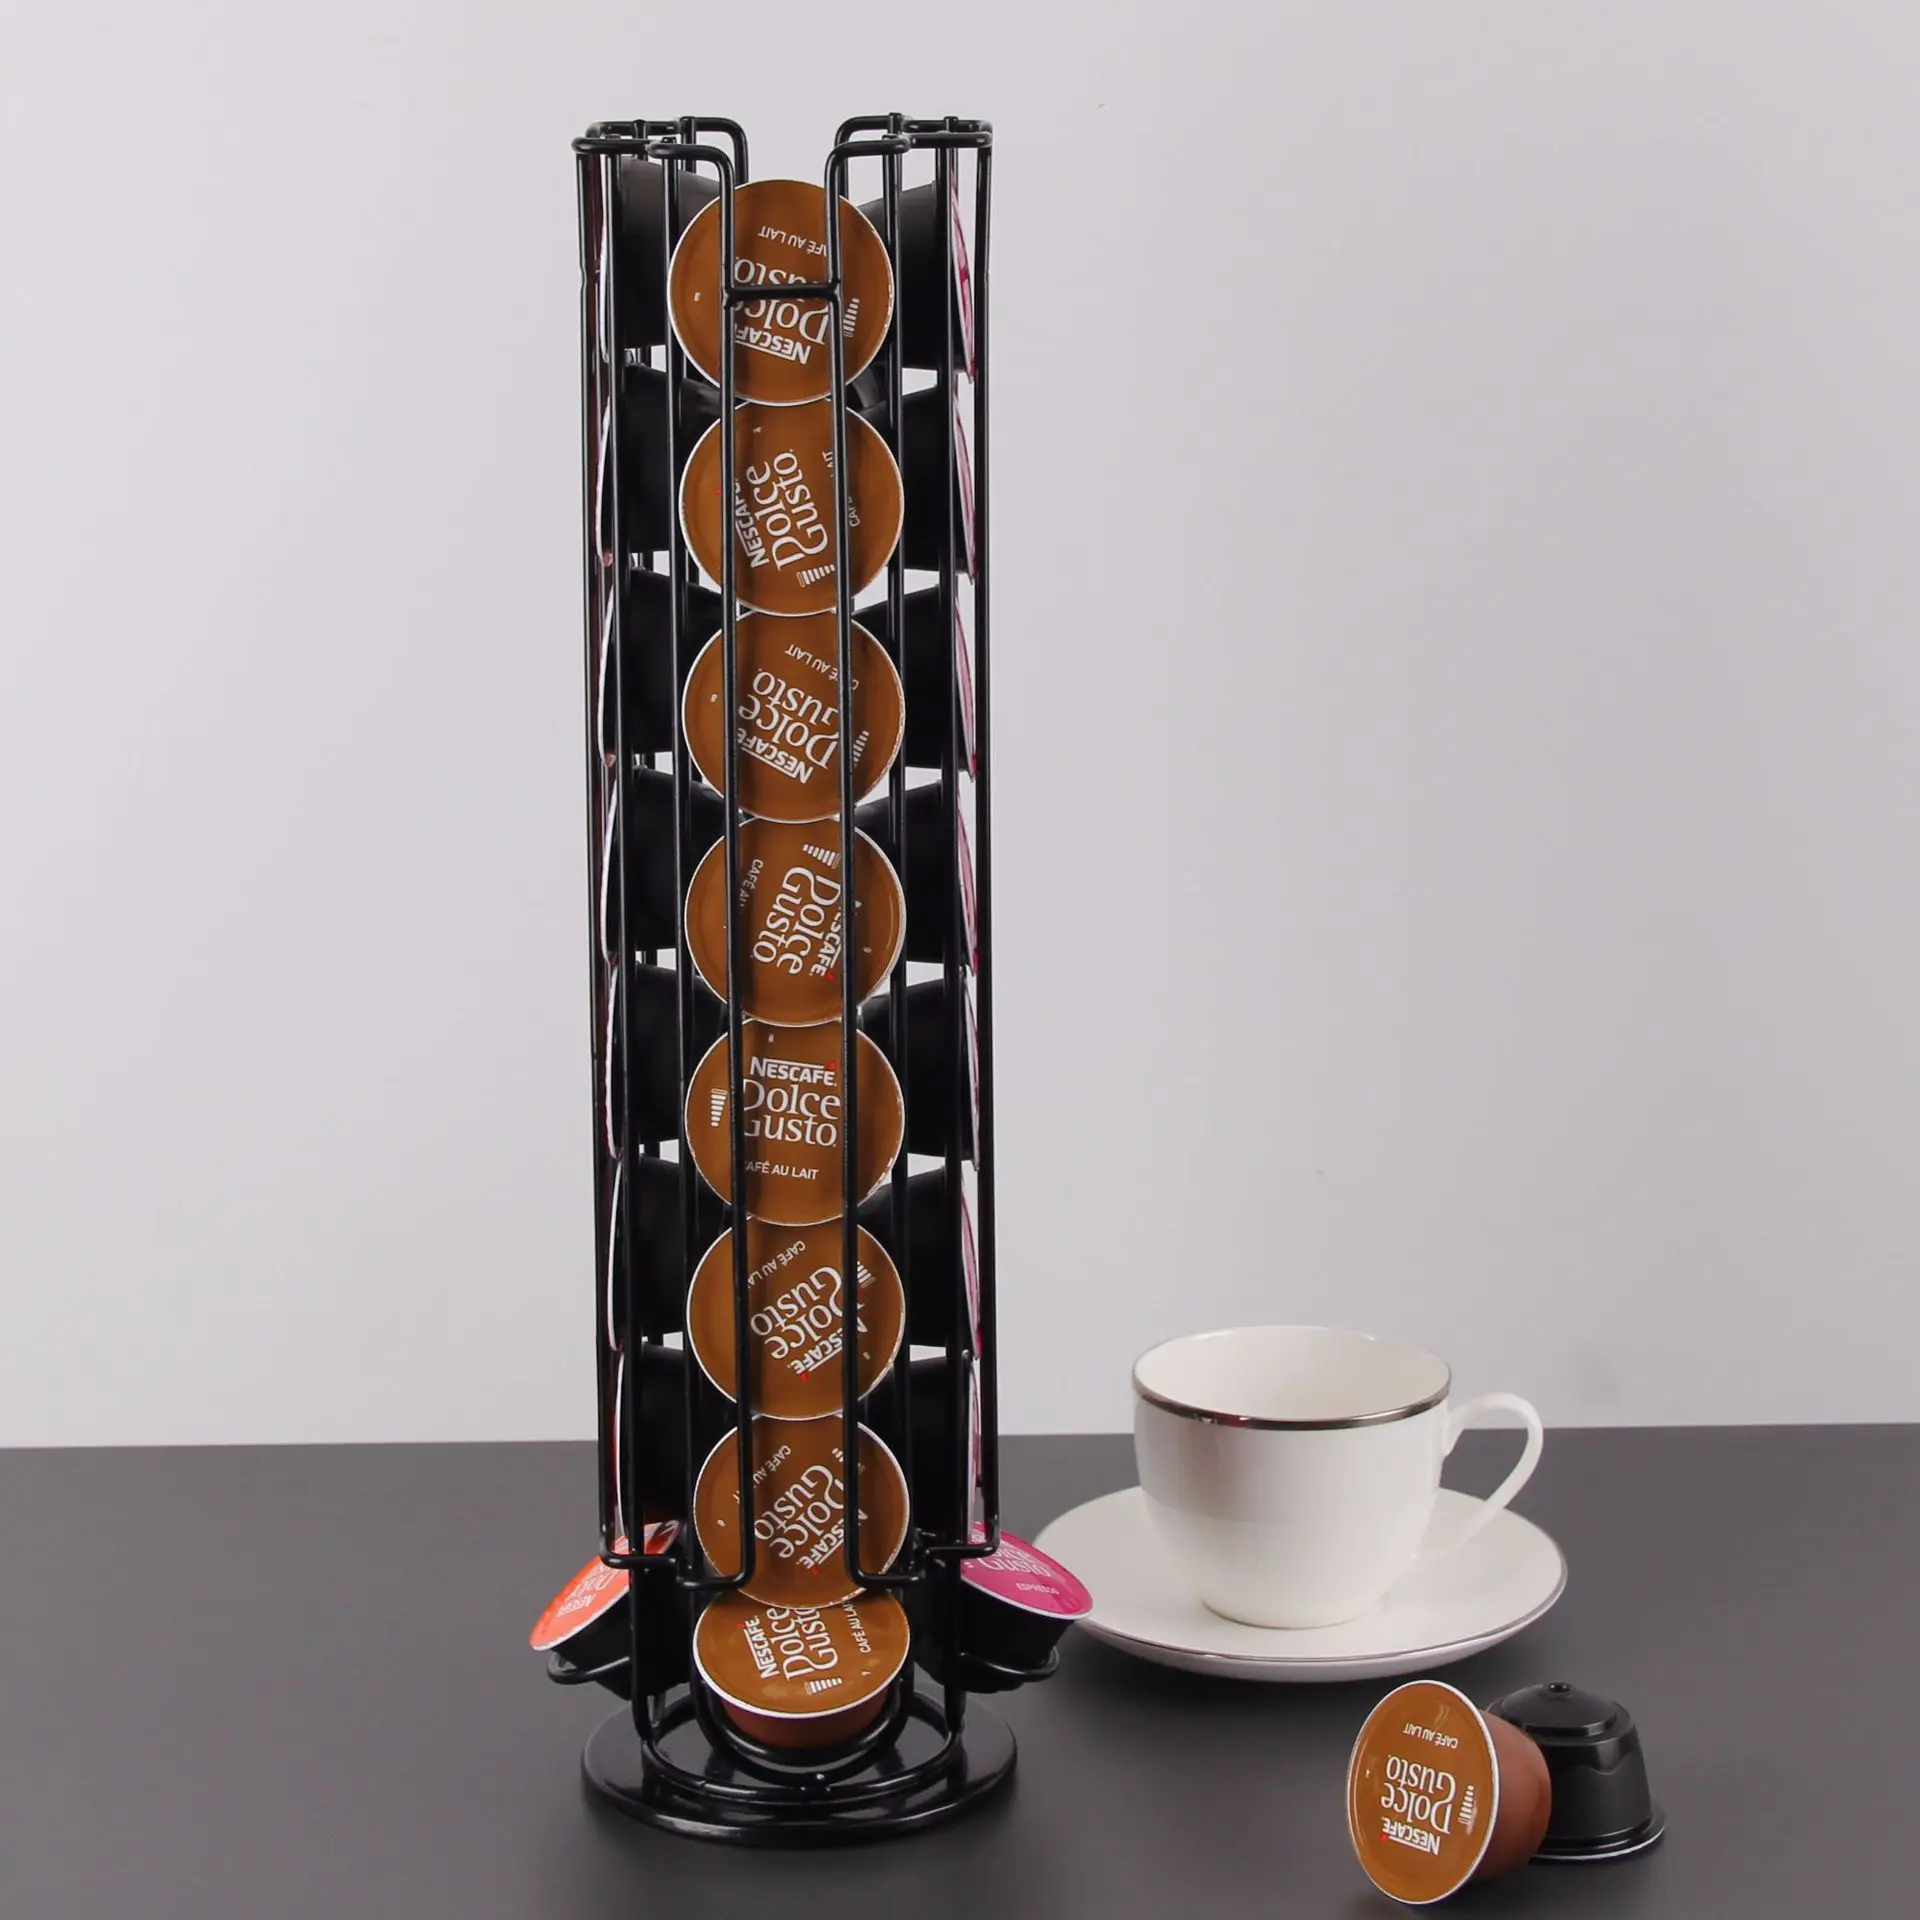 40 tazze caffè Nespresso porta Capsule porta caffè porta cialde